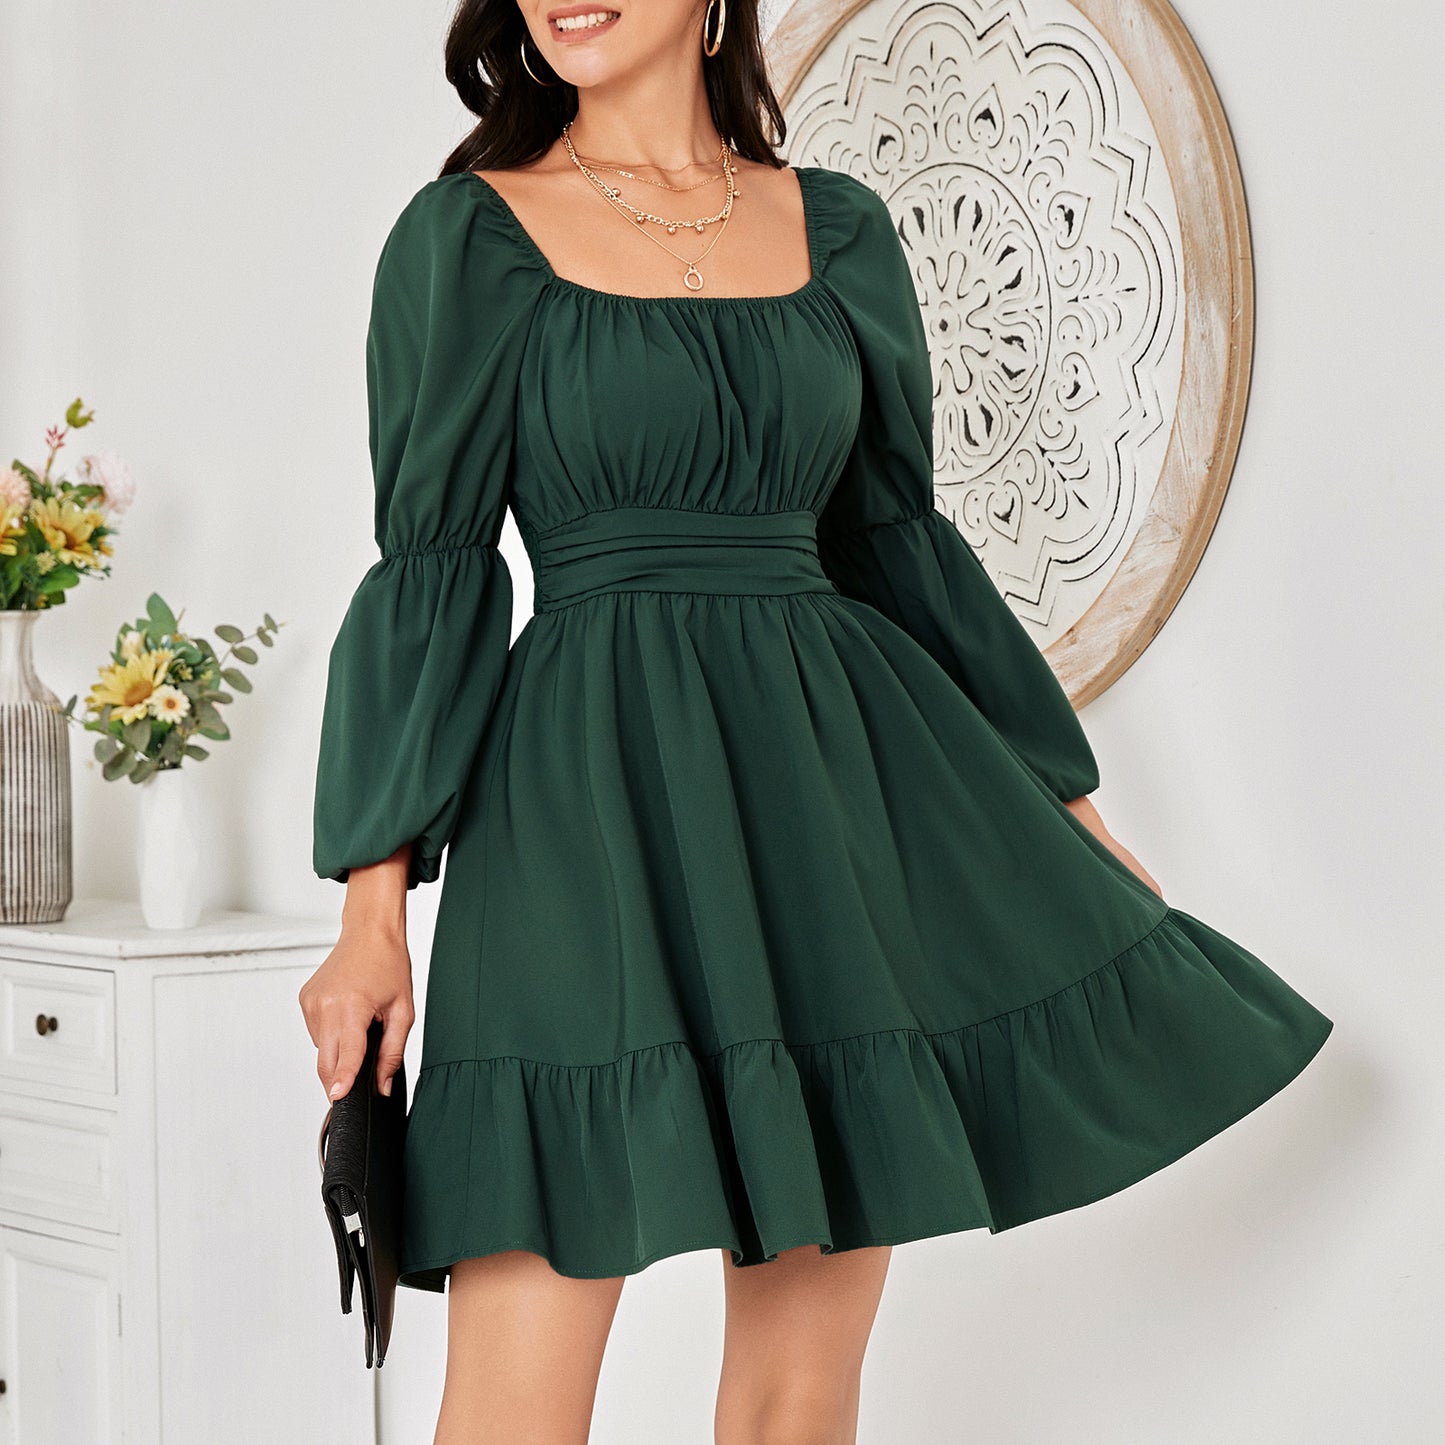 Exlura Women’s Casual Cottagecore Mini Dress Square Neck Long Puff Sleeve Dress Empire Waist Vintage Cocktail Dress